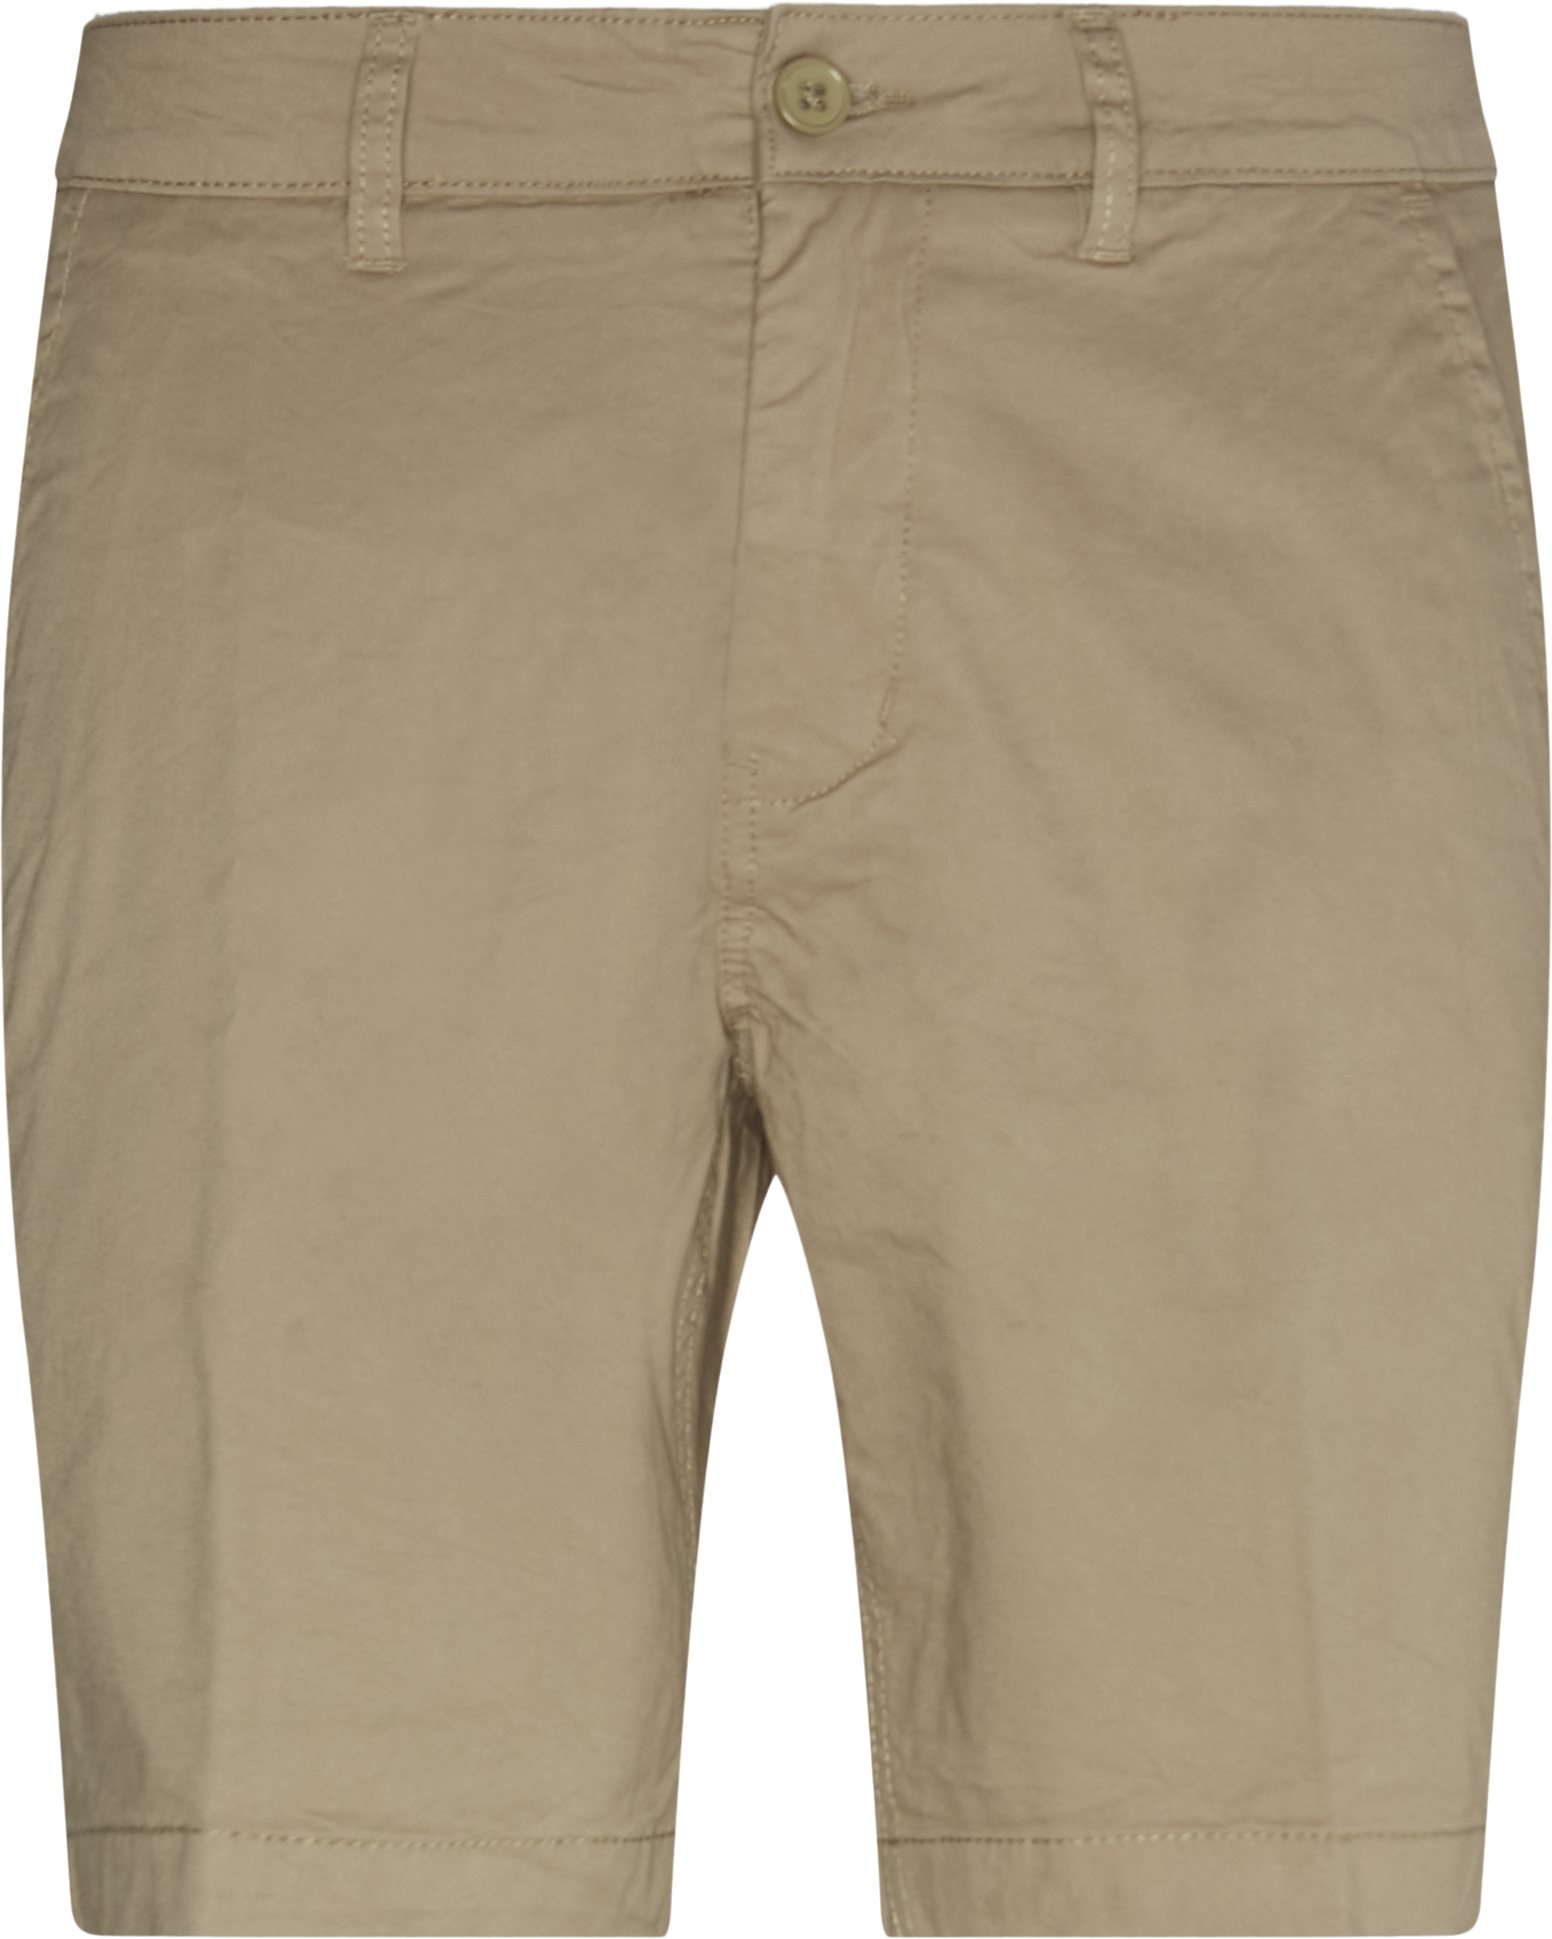 Riva shorts - Shorts - Regular fit - Sand